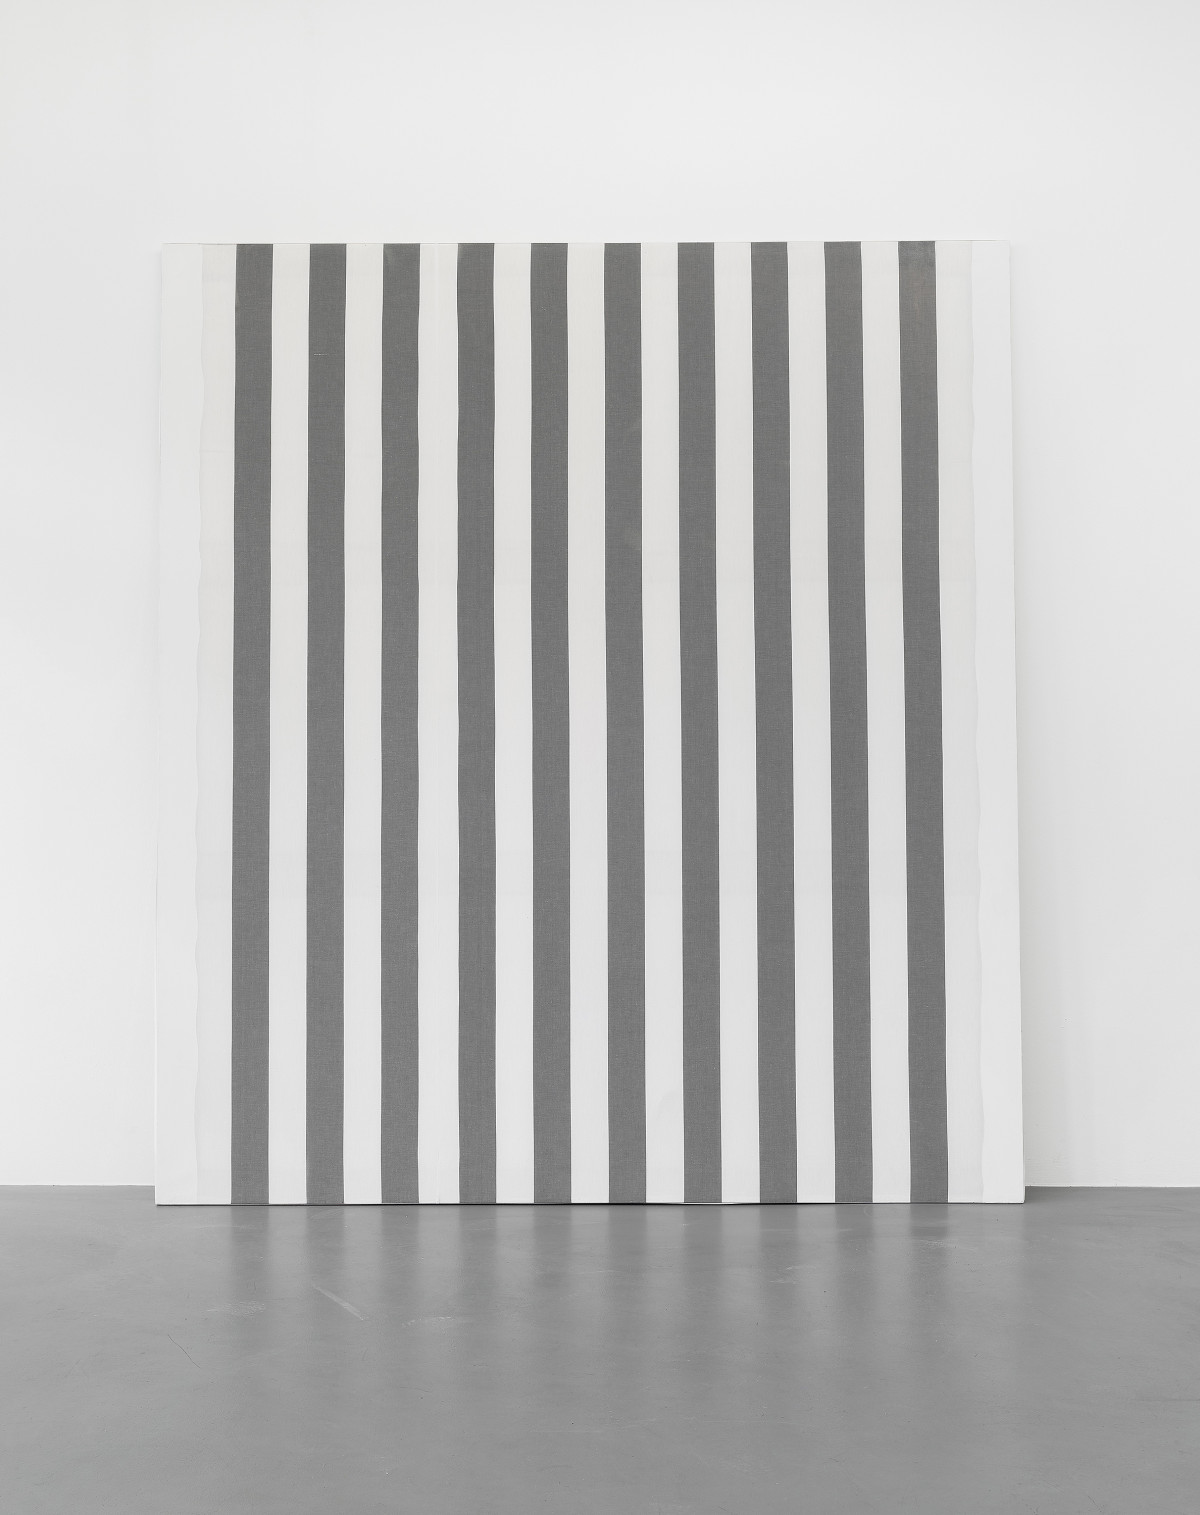 Daniel Buren, ‘Peinture acrylique blanche sur tissu rayé blanc et noir’, 1966, Acryl auf Markisenstoff